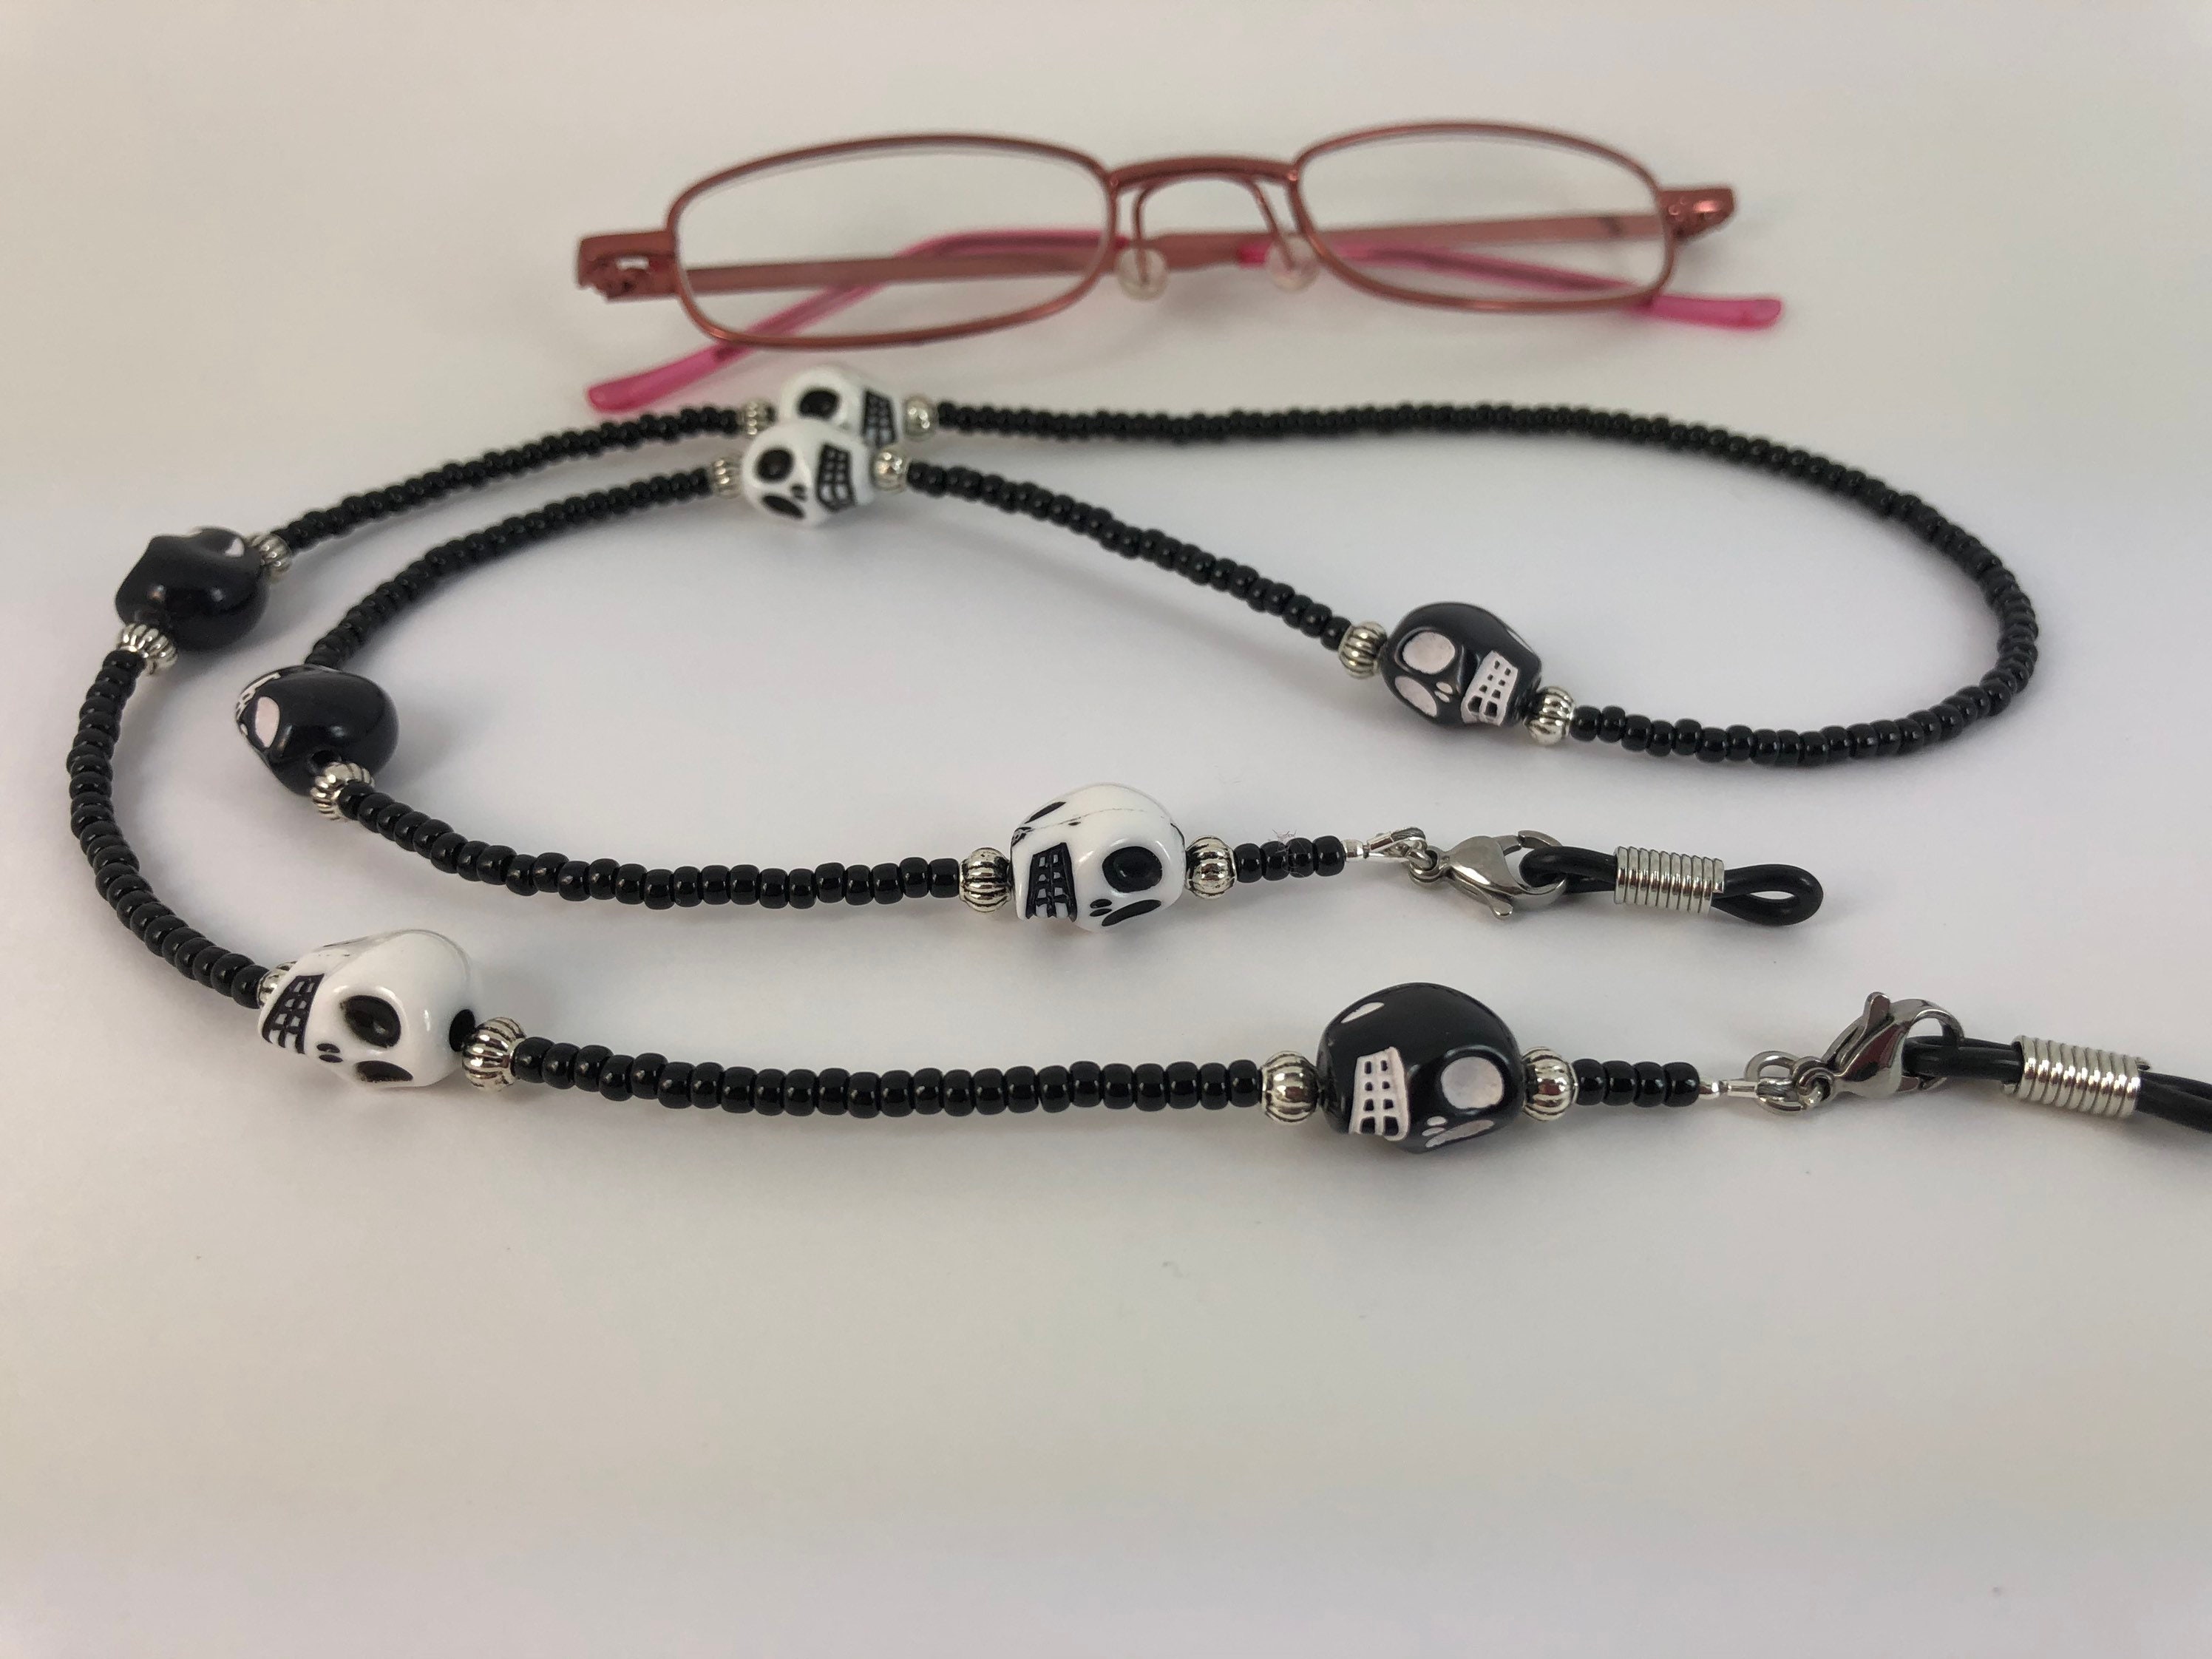 Reaowazo Mushroom Chain and Spike Chain Cute Colorful Waist Chain Punk Goth Keychains Harajuku Accessories